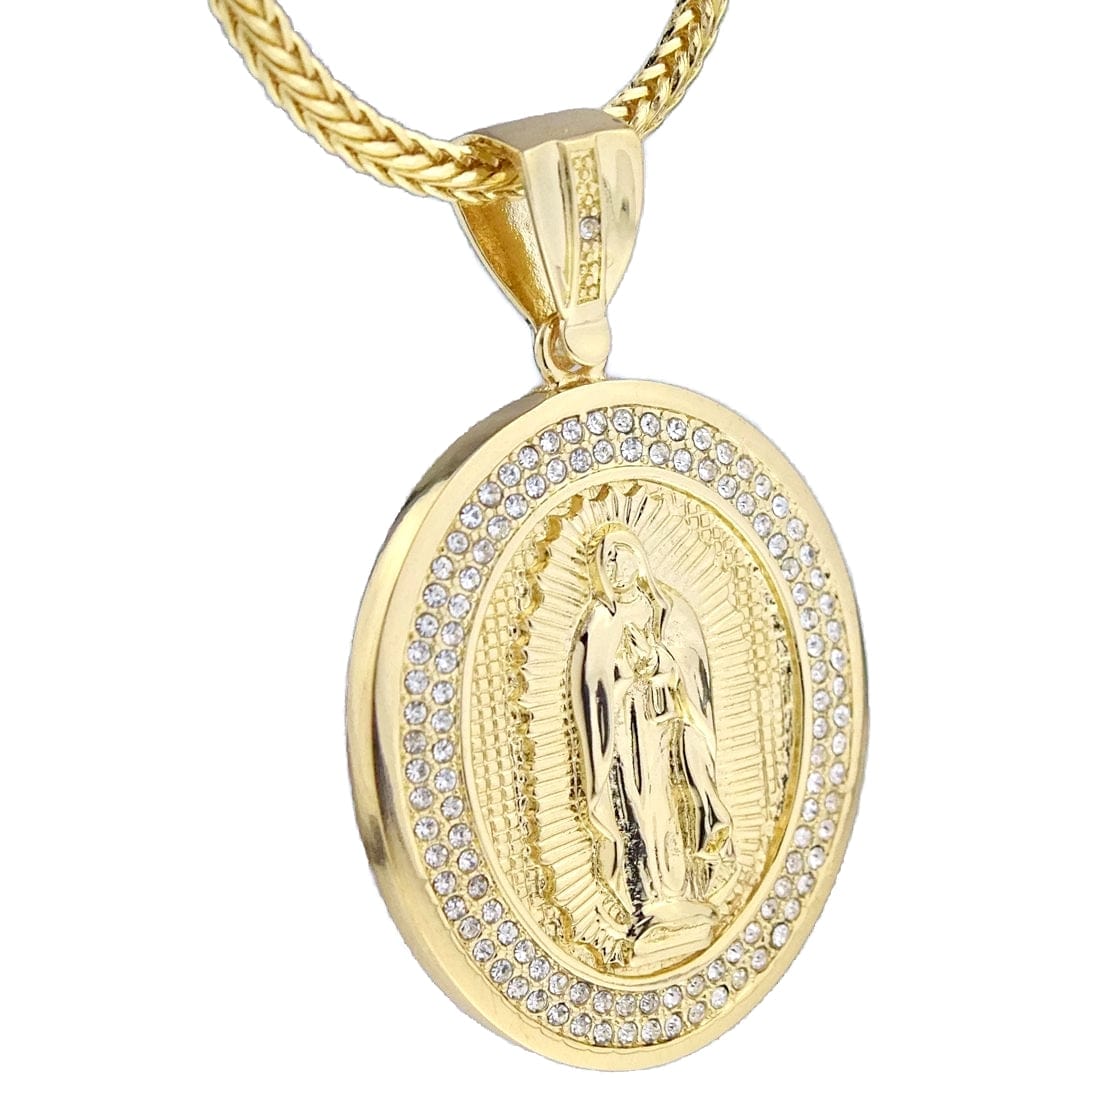 Oval La Virgen de Guadalupe Gold Finish Franco Chain Necklace 36